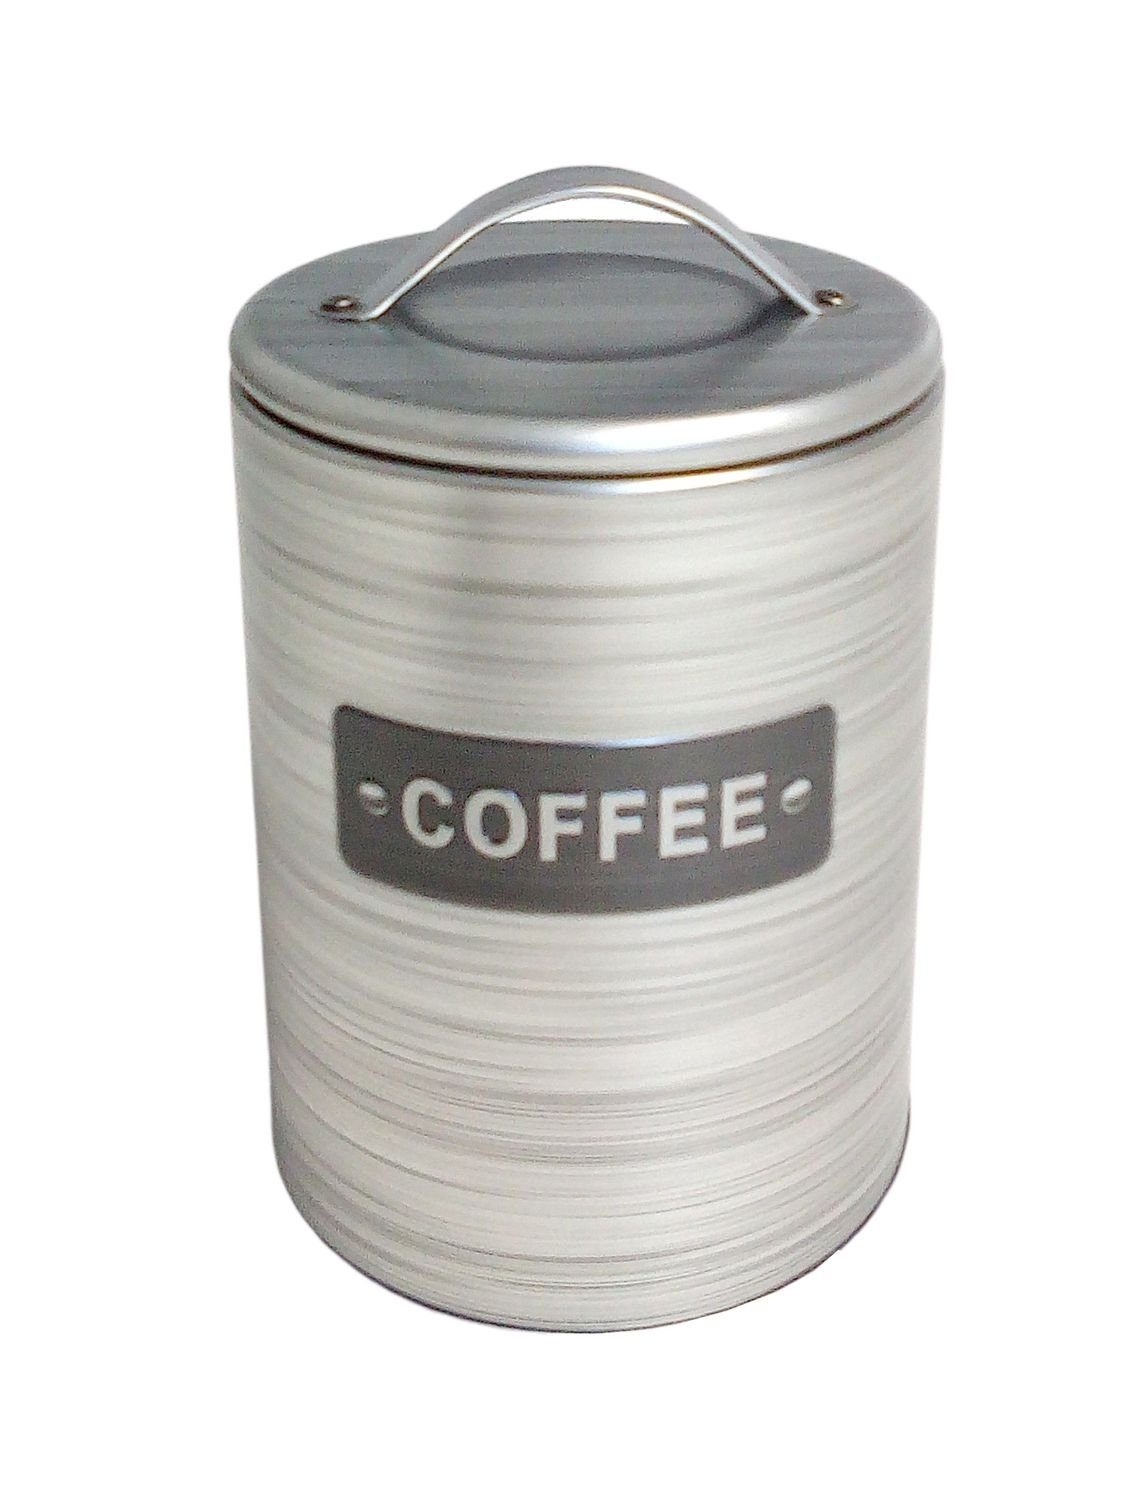 1a-Handelsagentur Vorratsdose »Metall Kaffeedose Kaffeebox Kaffeebehälter  Kaffeespender Kaffeebüchse Blechdose«, Metall